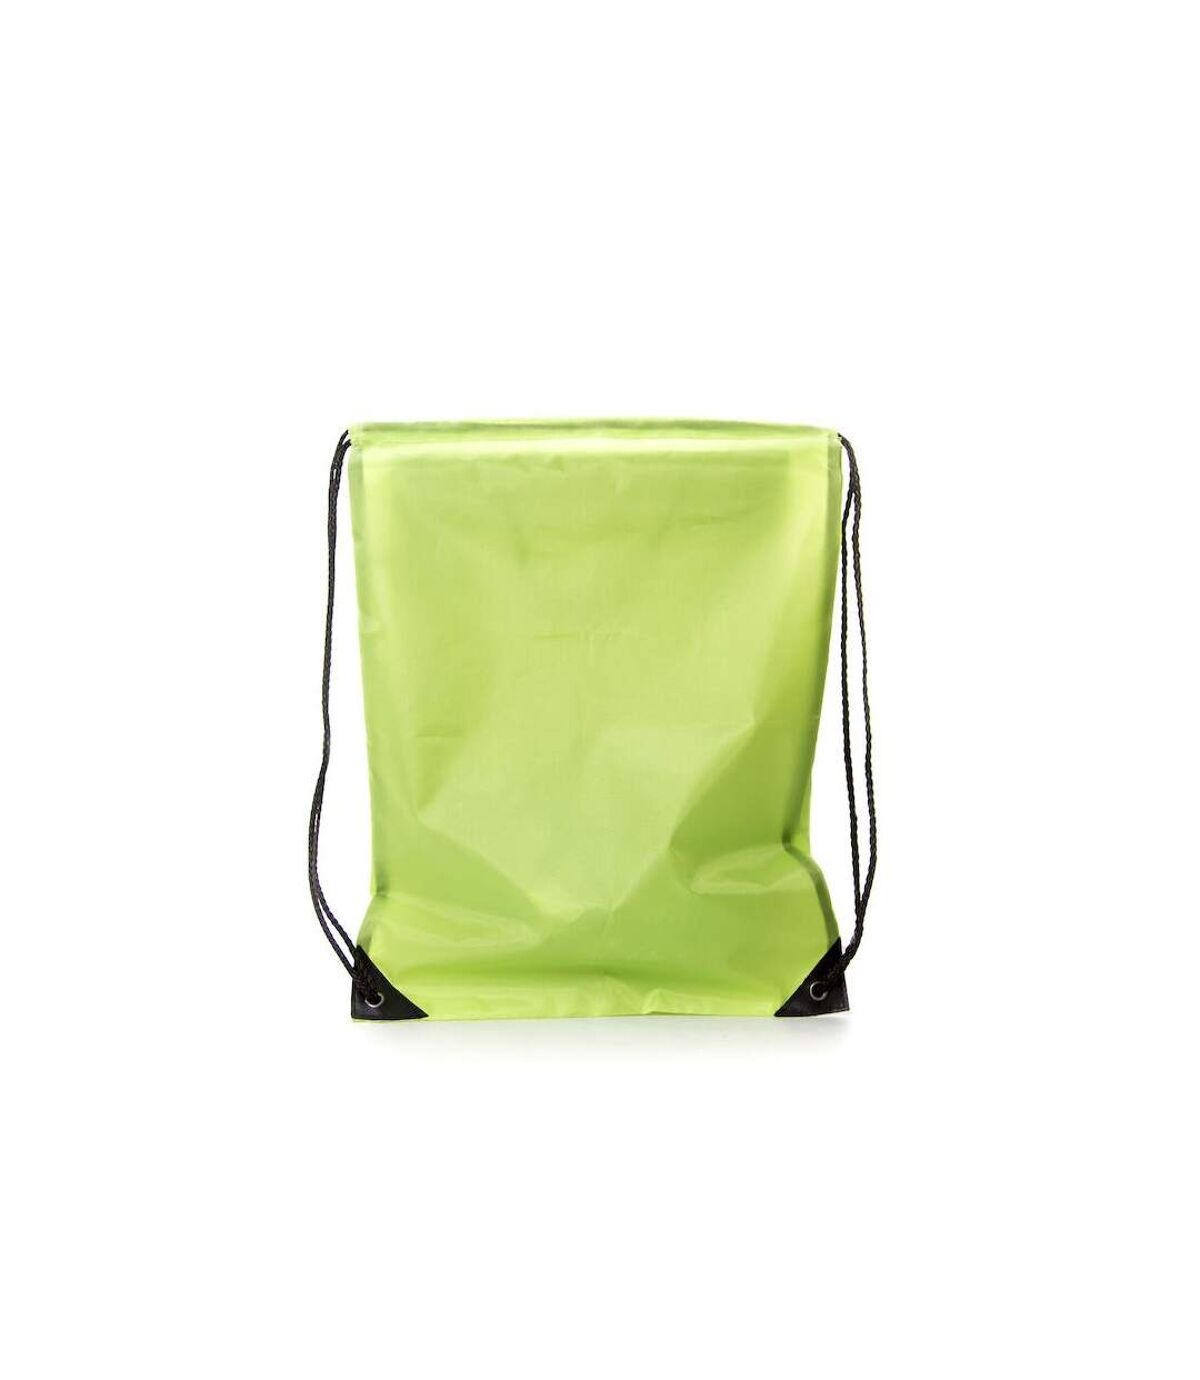 United Bag Store Drawstring Bag (Green) (One Size)